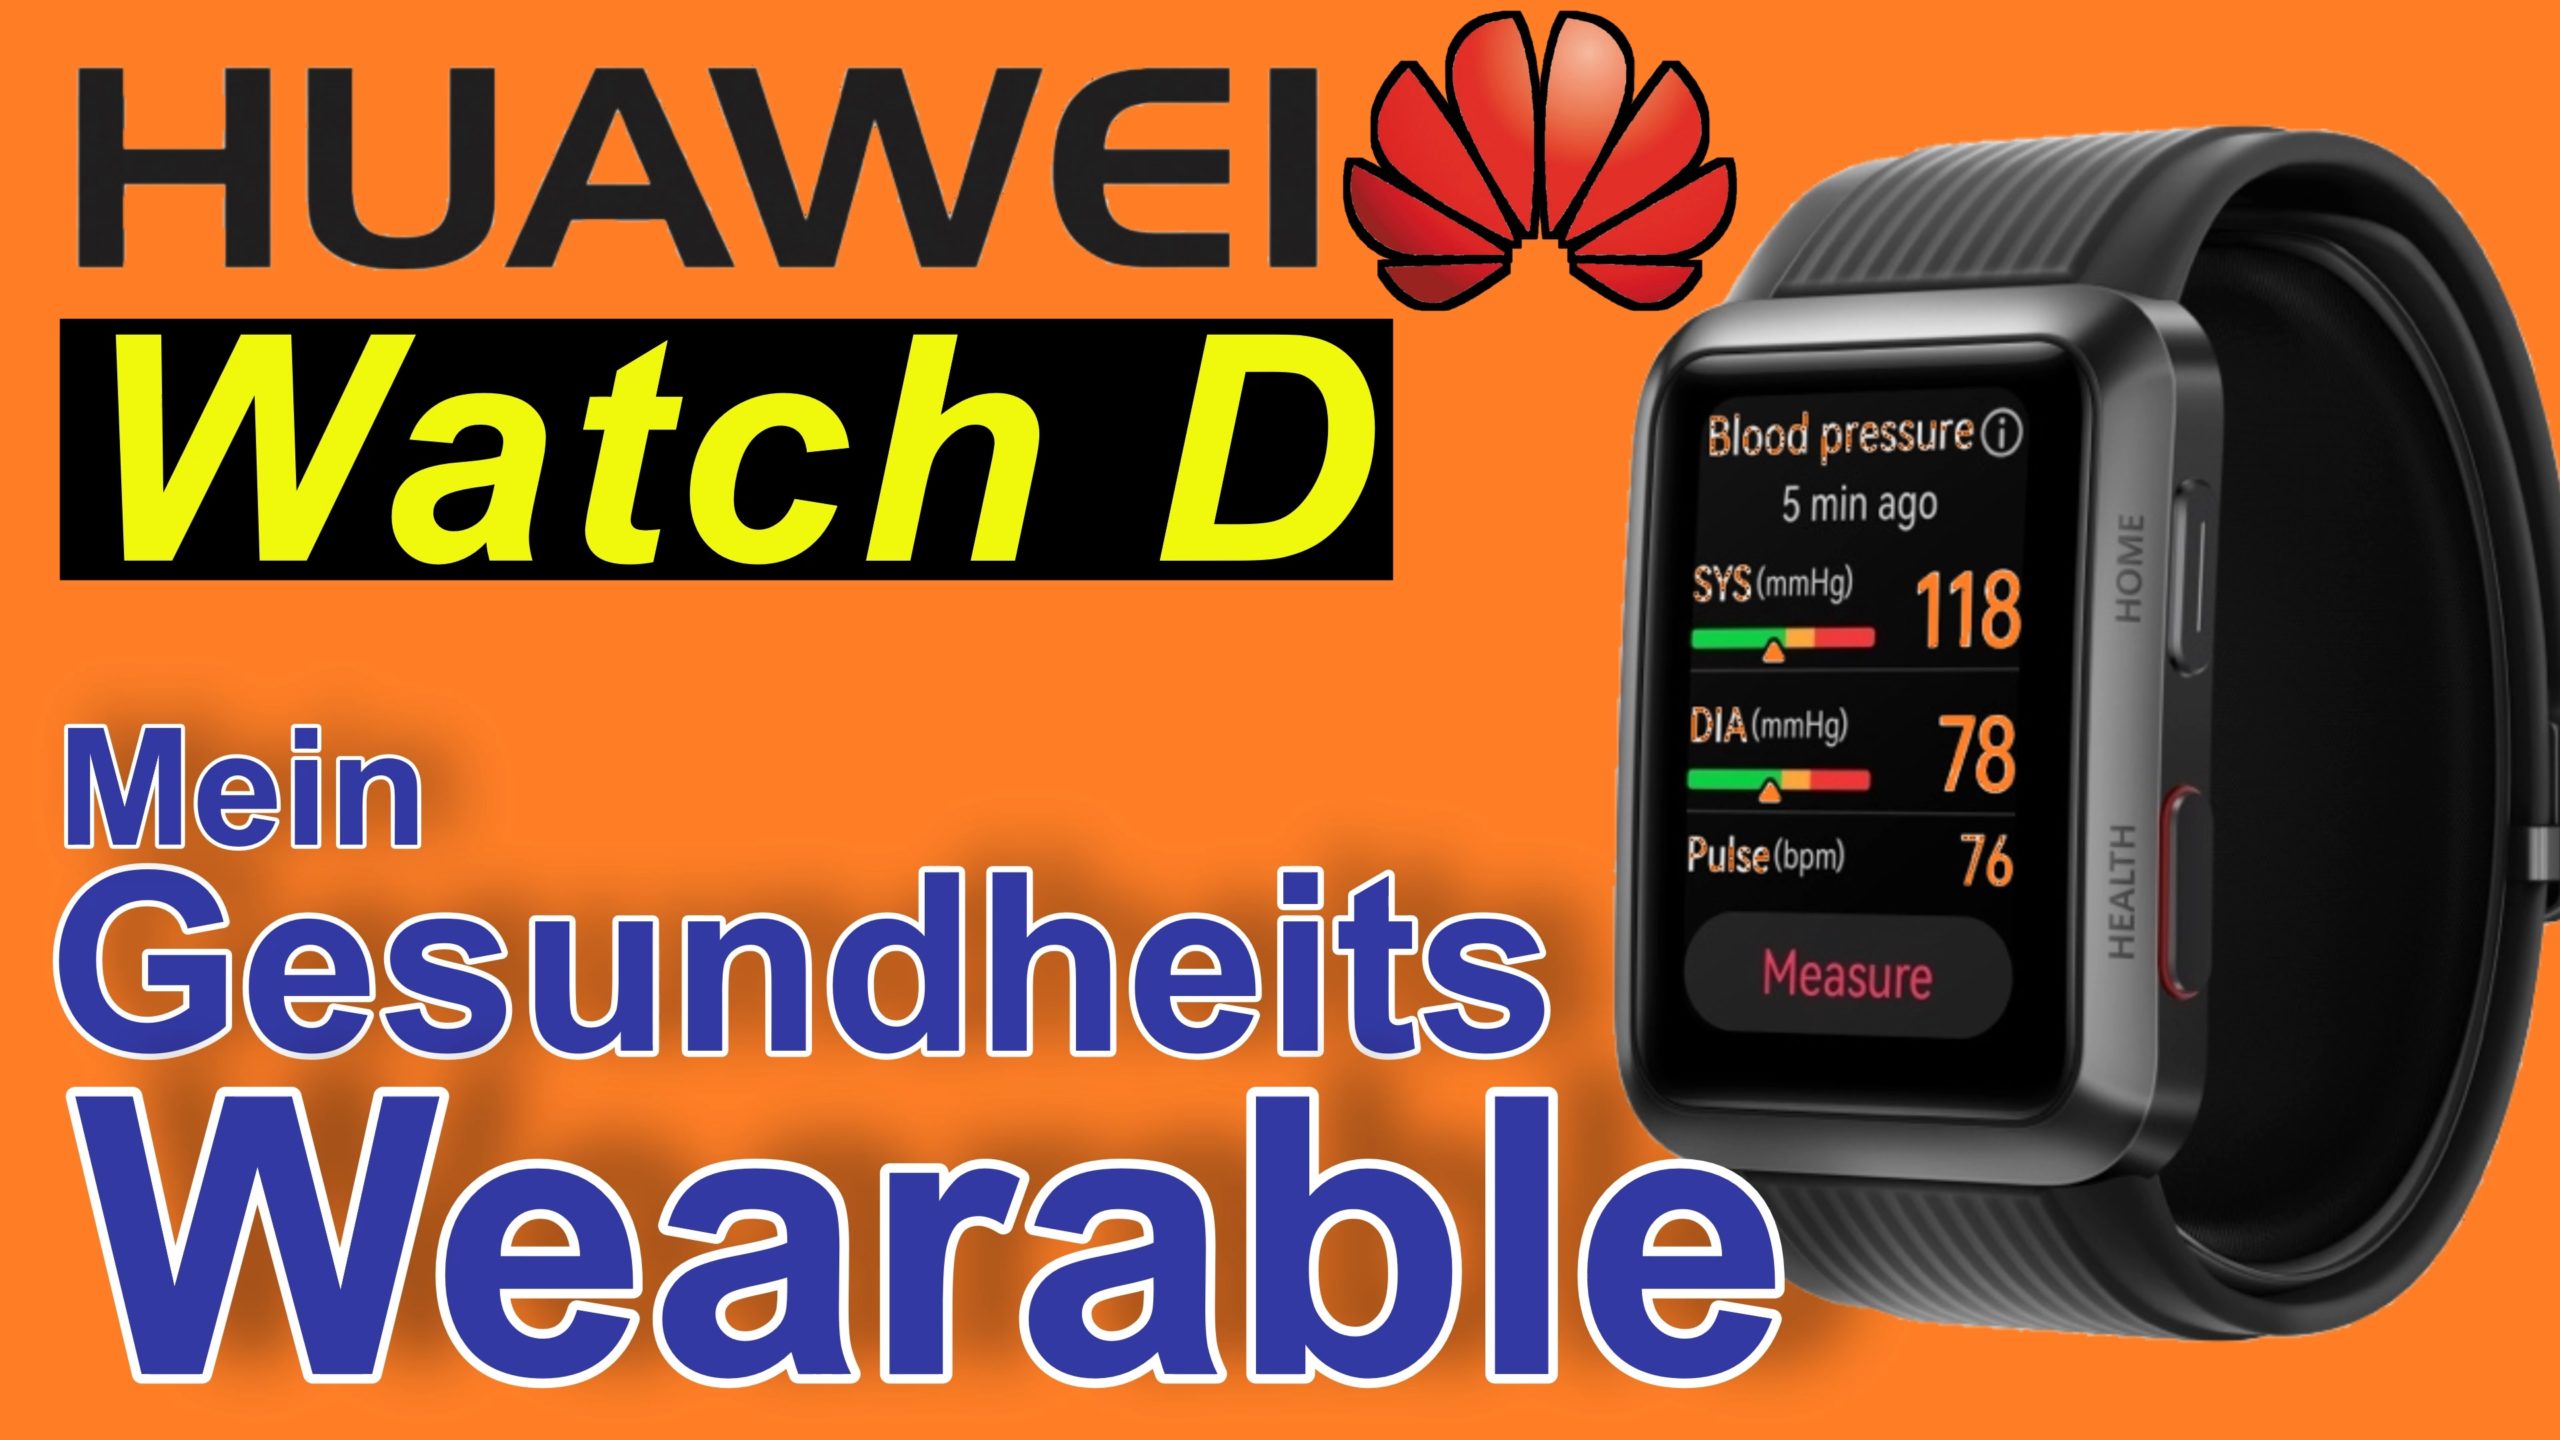 Huawei Watch D - messen, tracken, analysieren